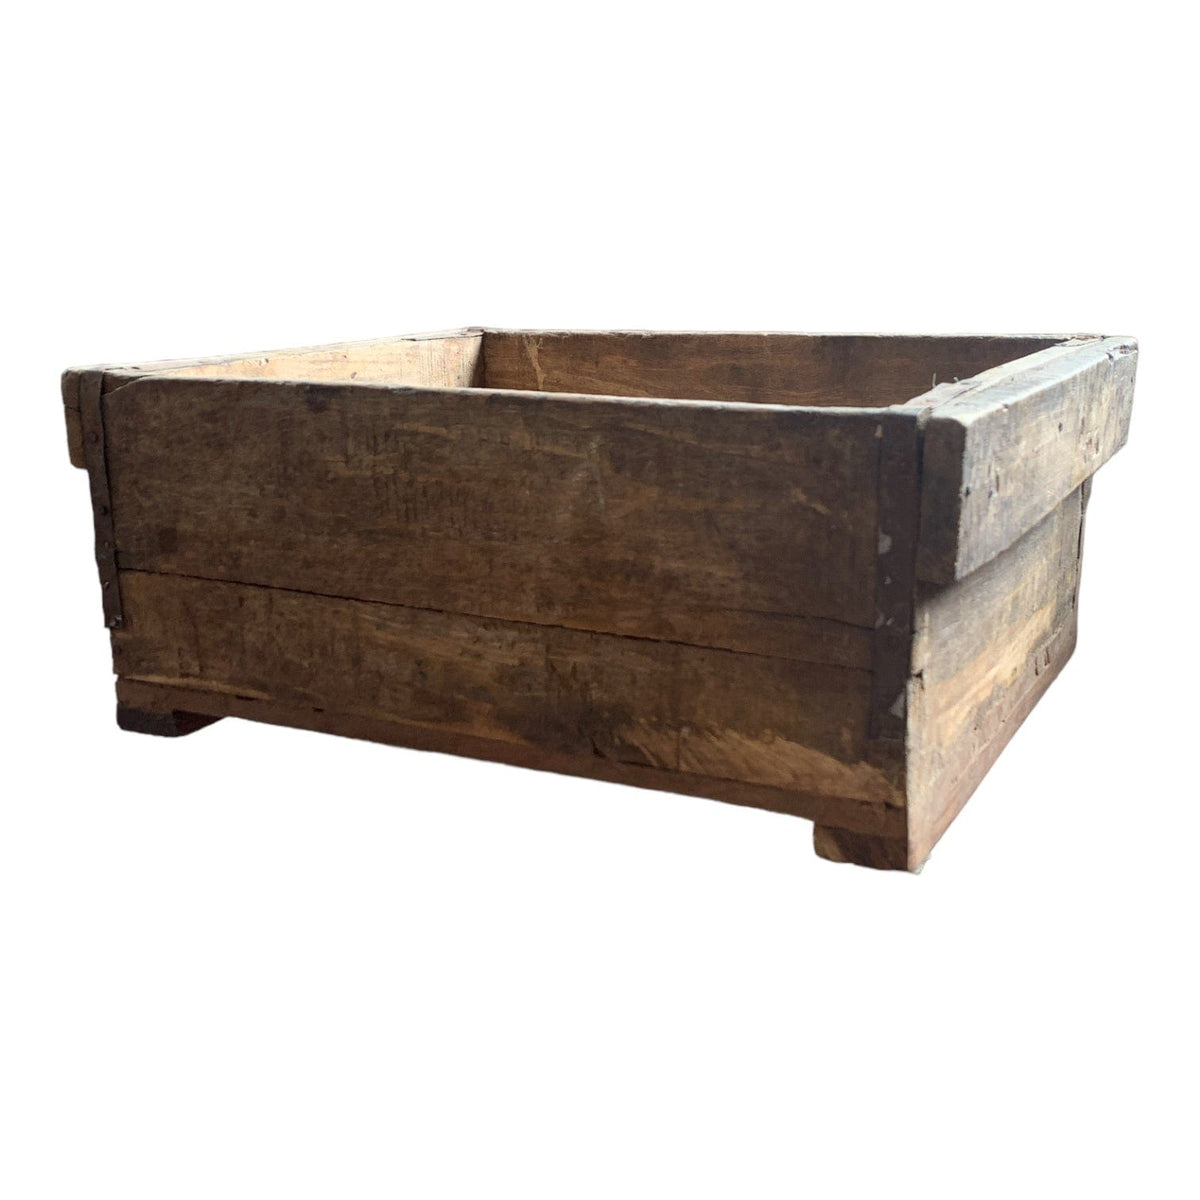 Original Wooden Shoe Box